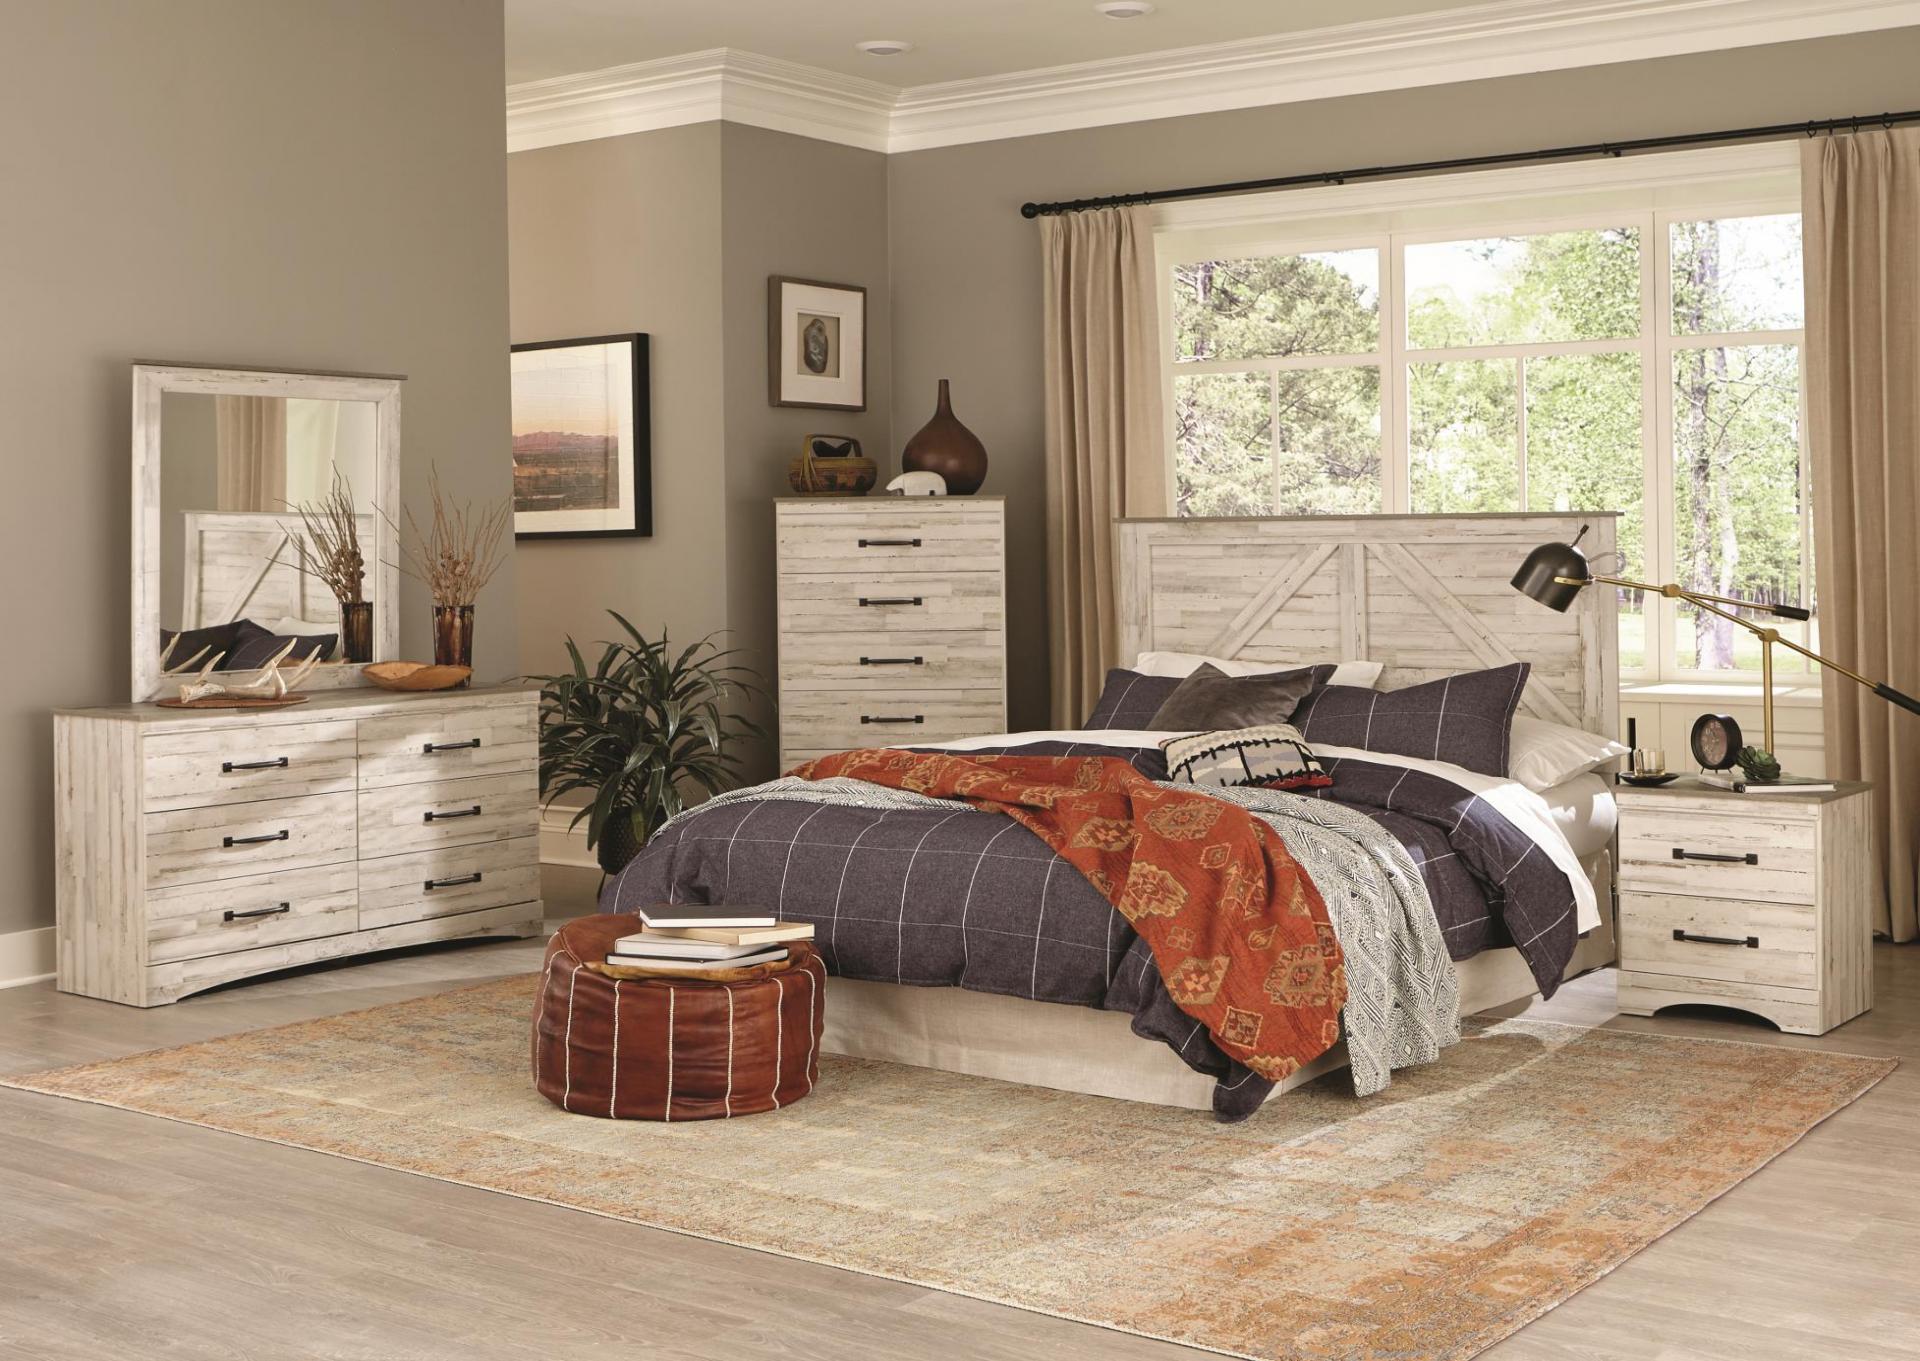 aspen richmond bedroom furniture